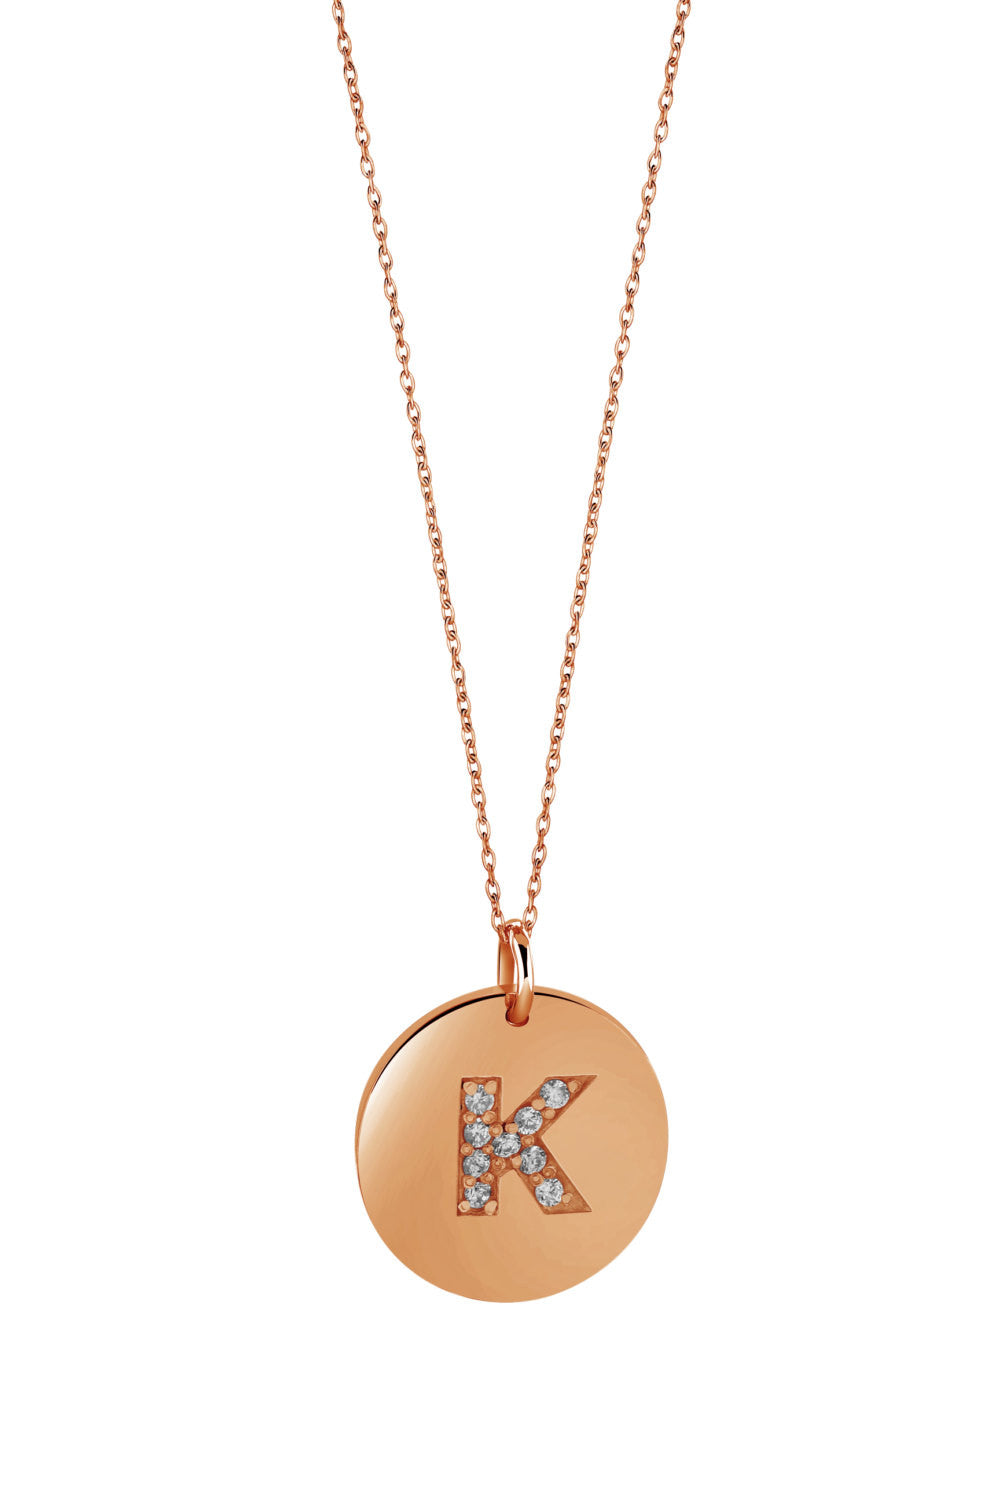 Monogrammed Gift Idea + Jewelry + Necklace + Pendant + Charm Necklace + Jennifer Meyer Necklace + MimicDesigns + Etsy 